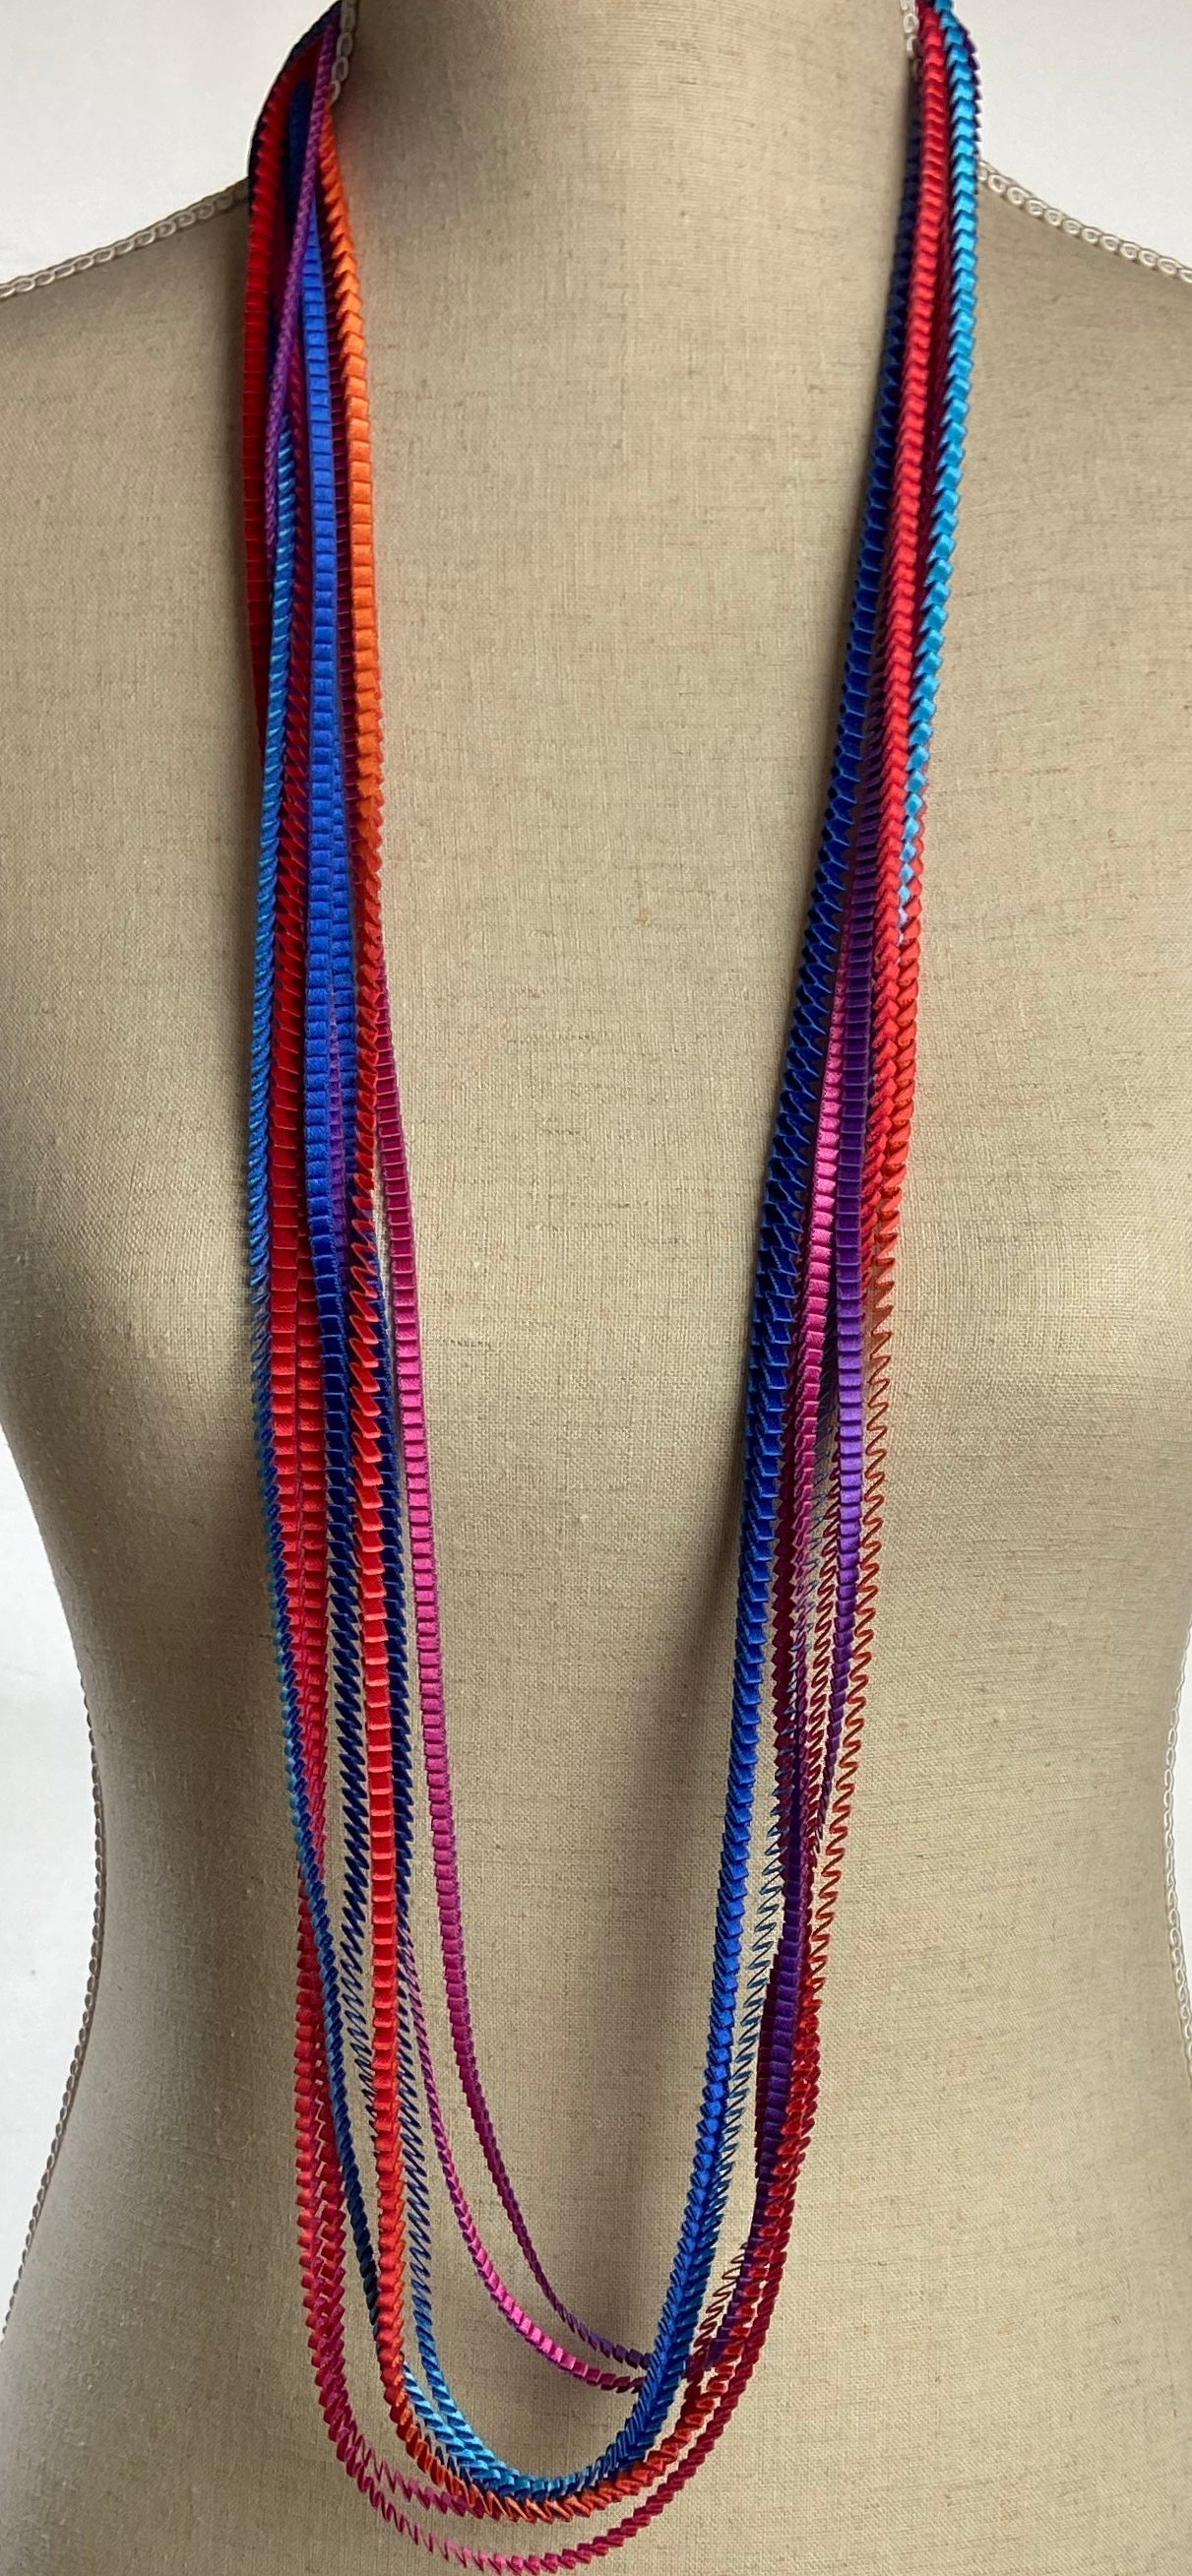 Purple, Fuchsia, Silver & Blue Necklace - The Nancy Smillie Shop - Art, Jewellery & Designer Gifts Glasgow